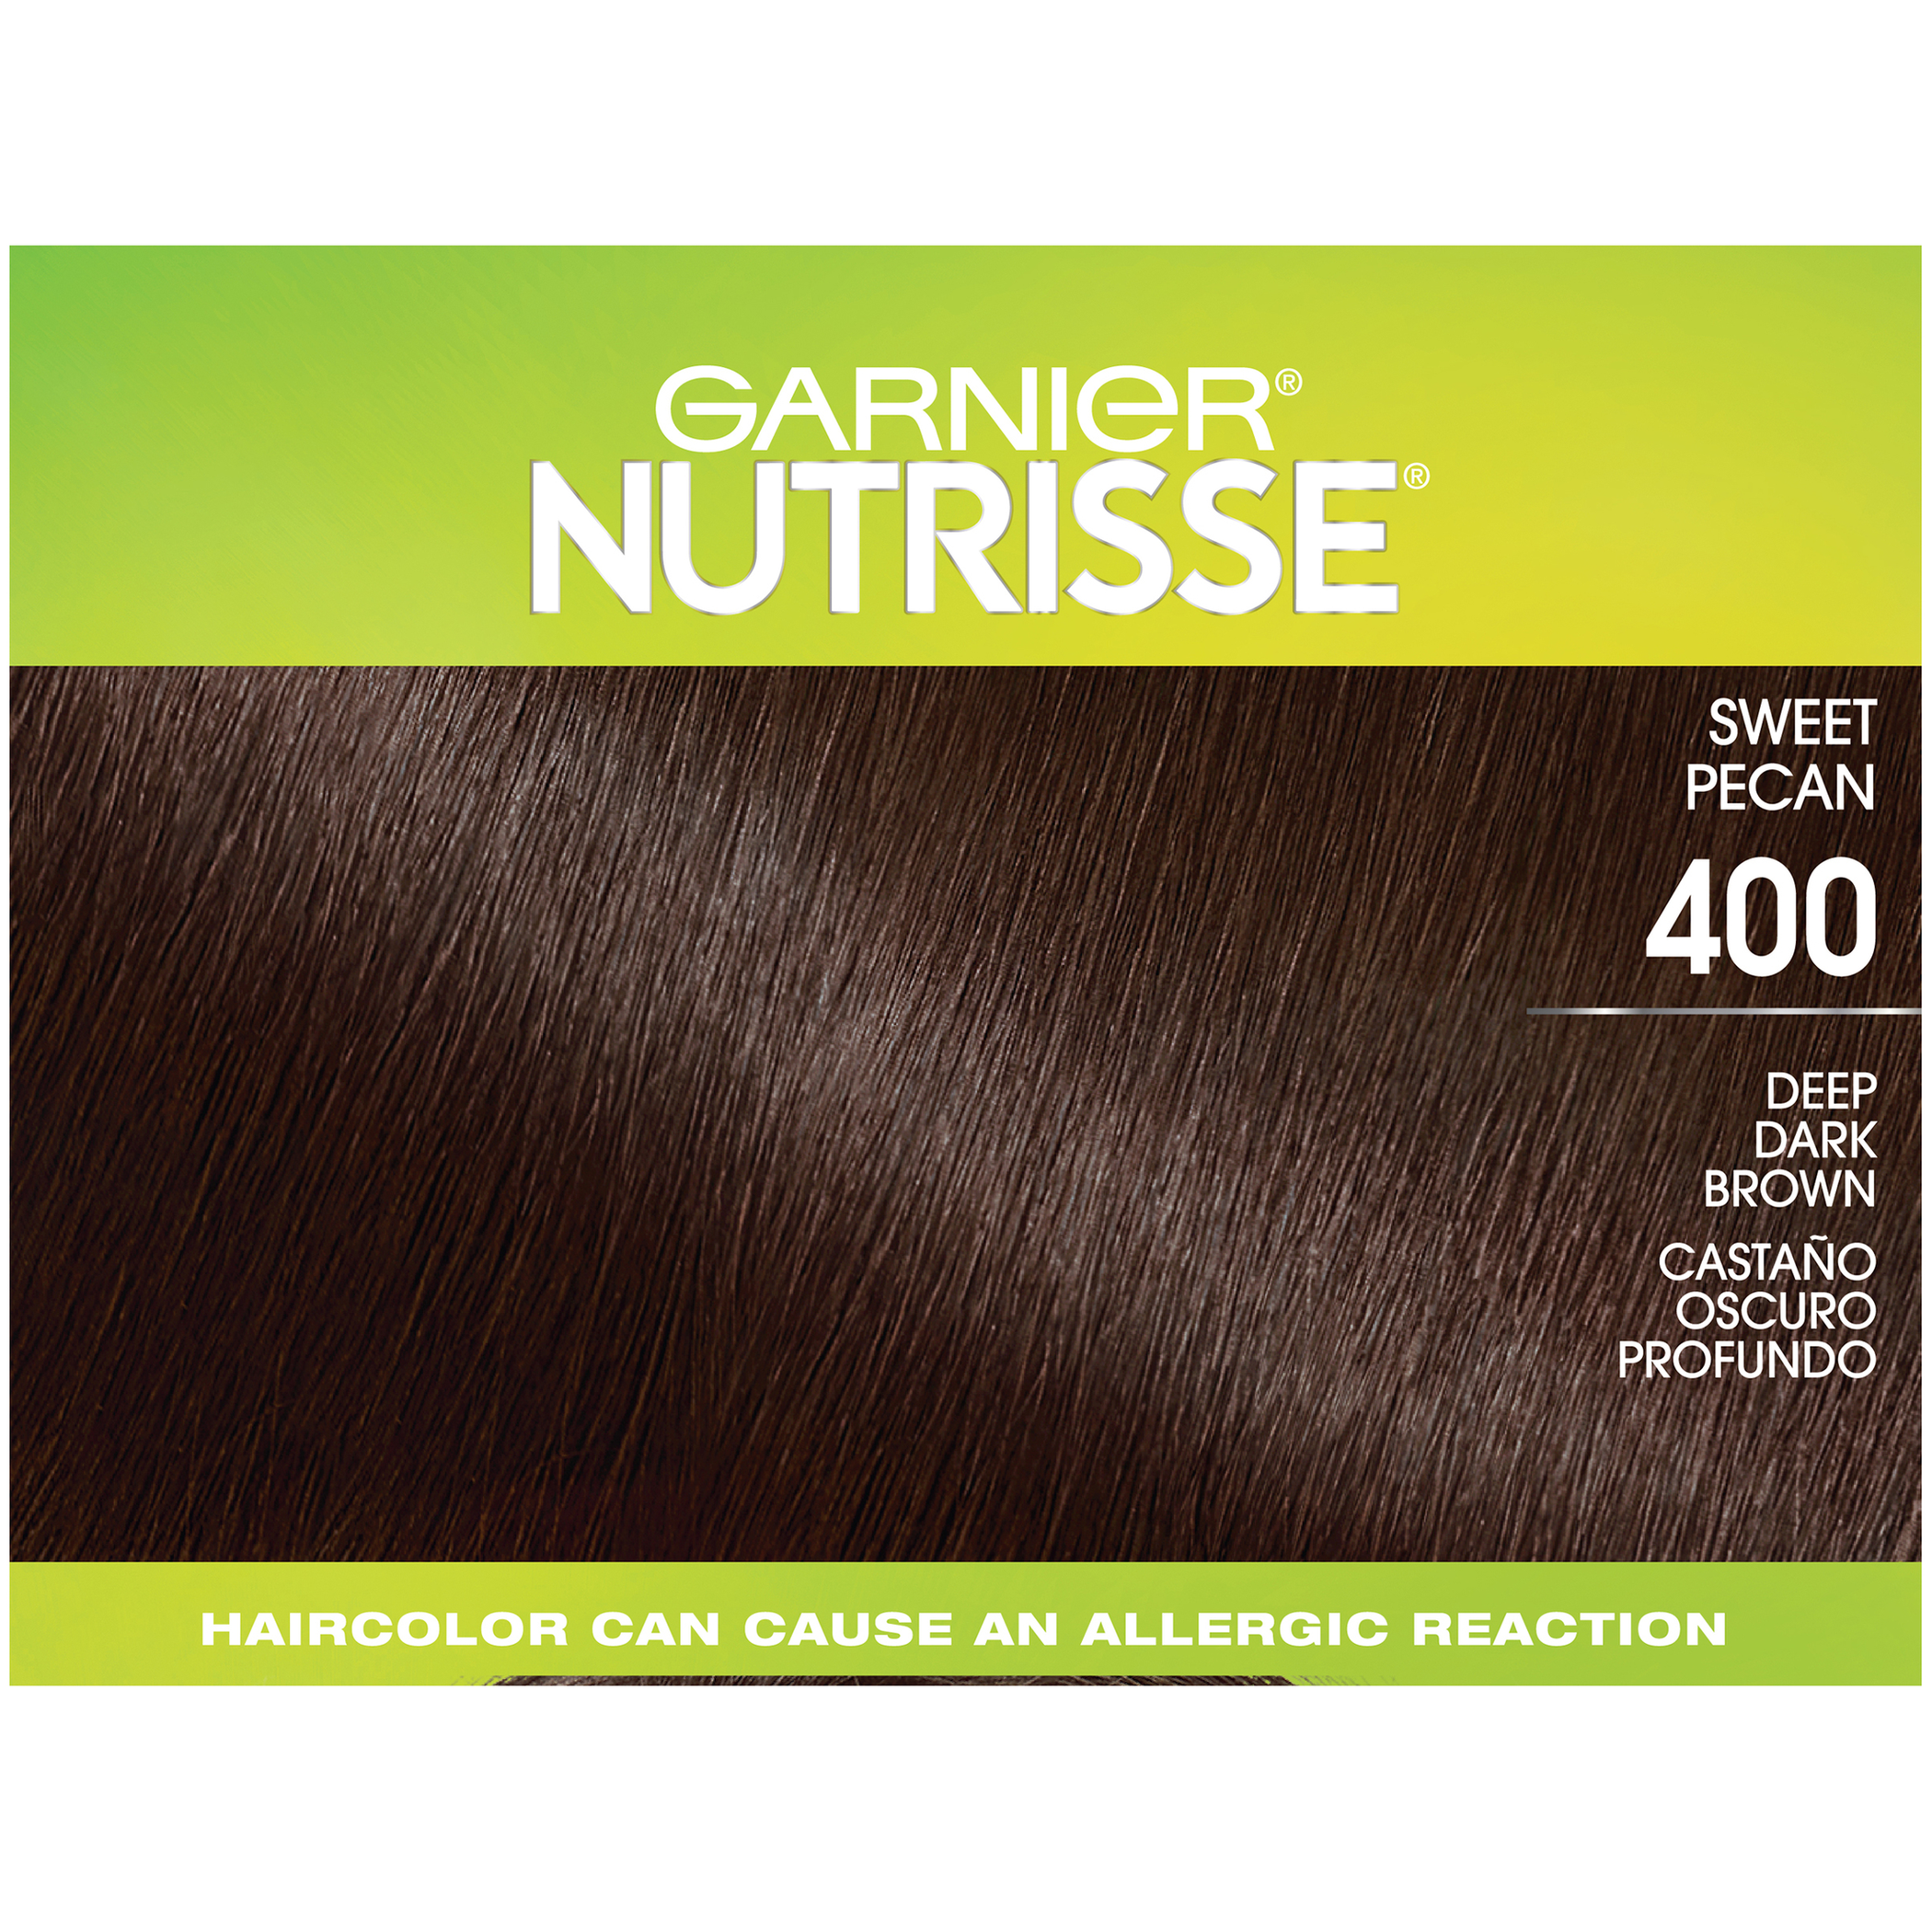 Garnier Nutrisse Nourishing Hair Color Creme, 400 Deep Dark Brown Sweet Pecan - image 3 of 8